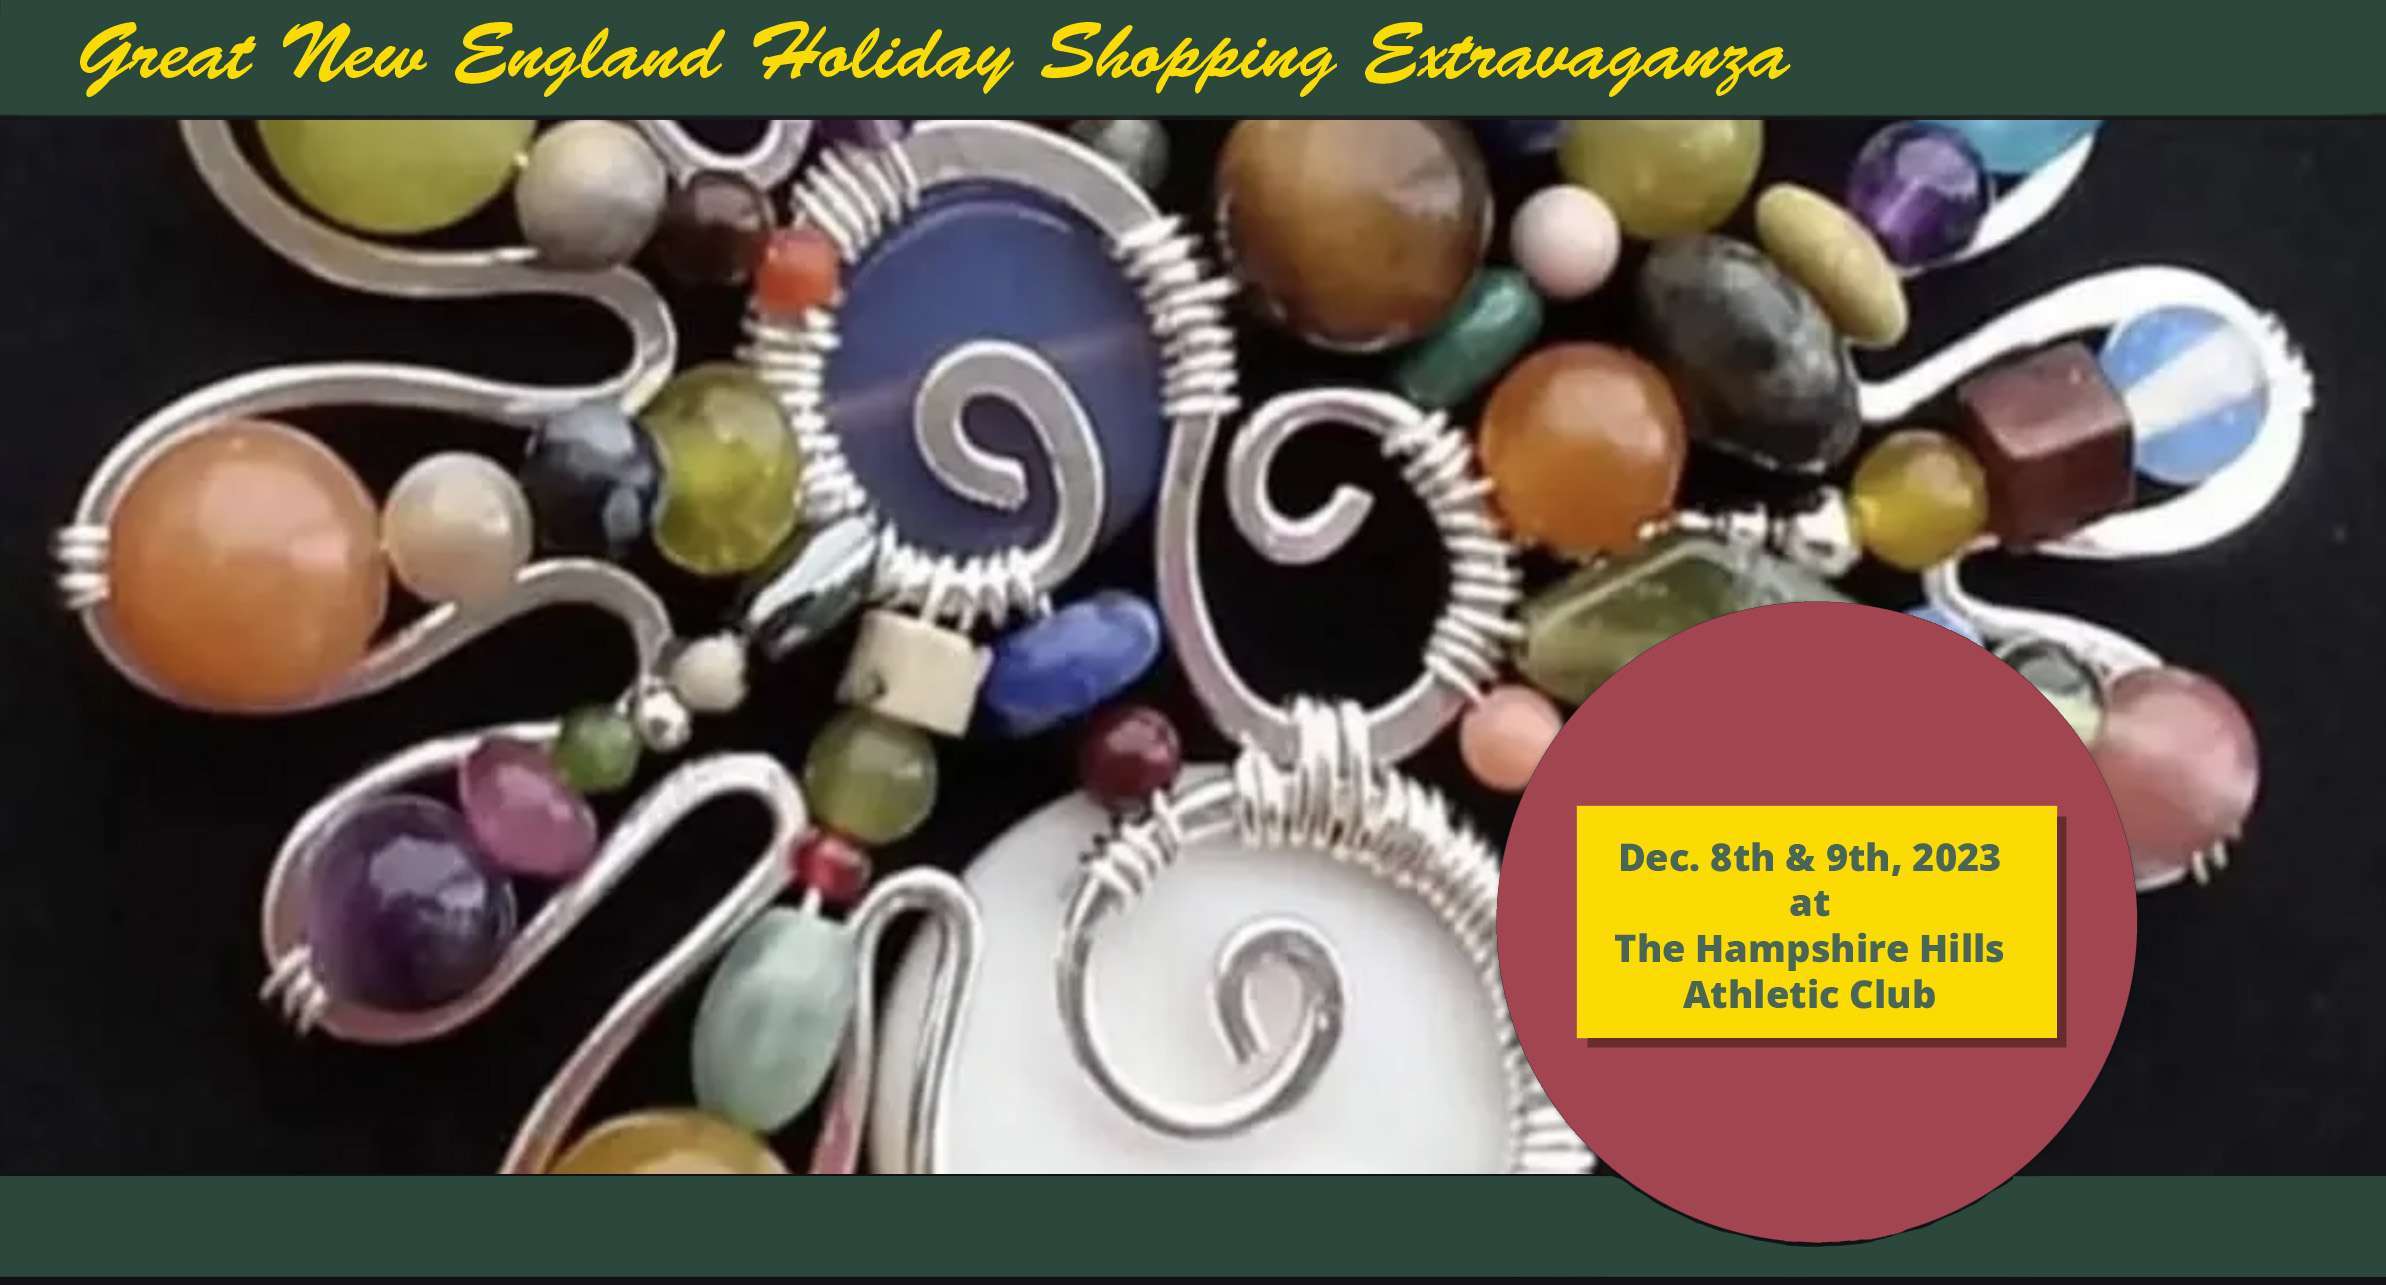 Great New England Holiday Shopping Extravaganza 2023